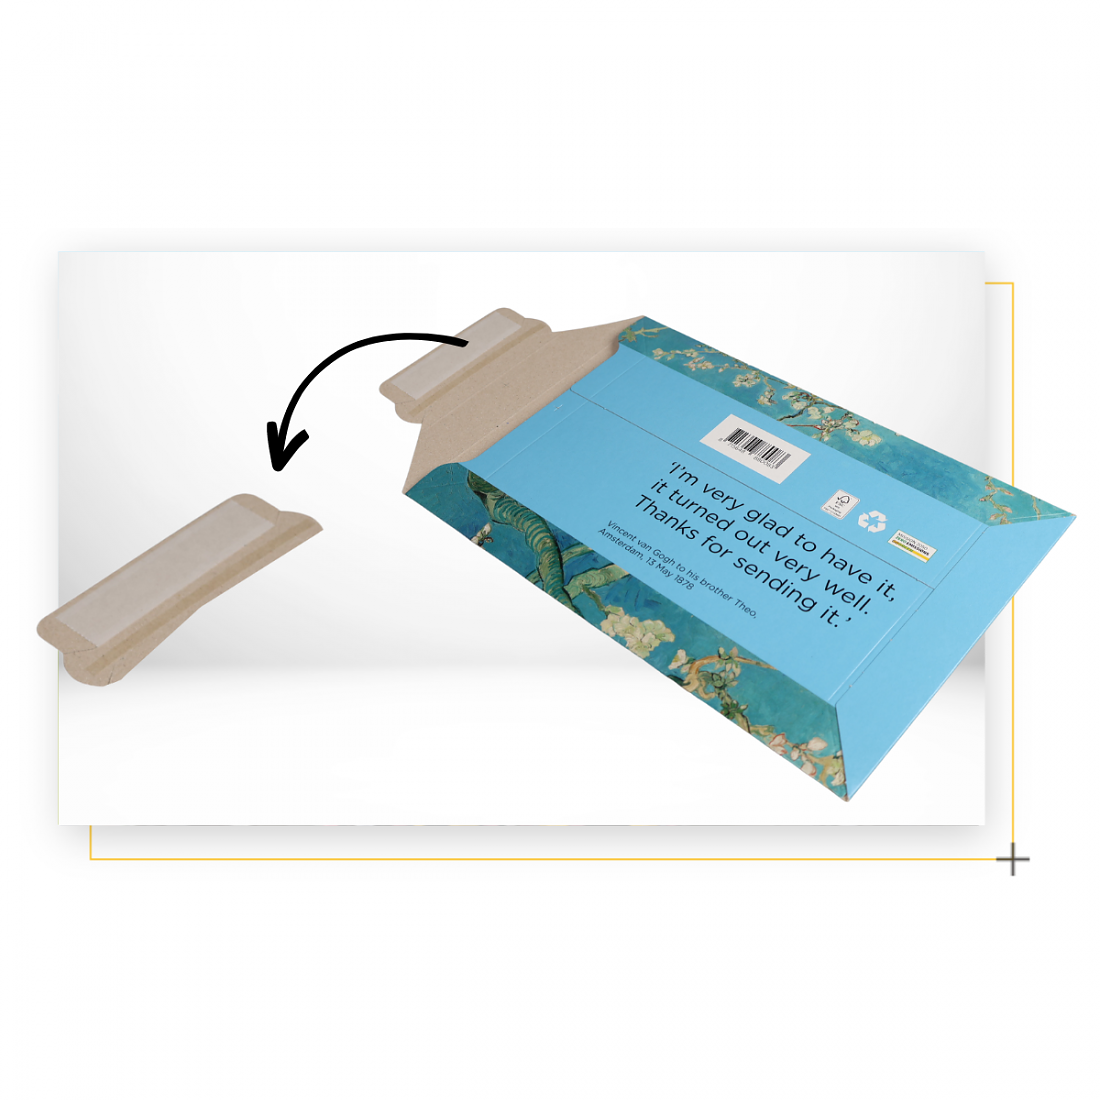 Self adhesive tape on packaging 